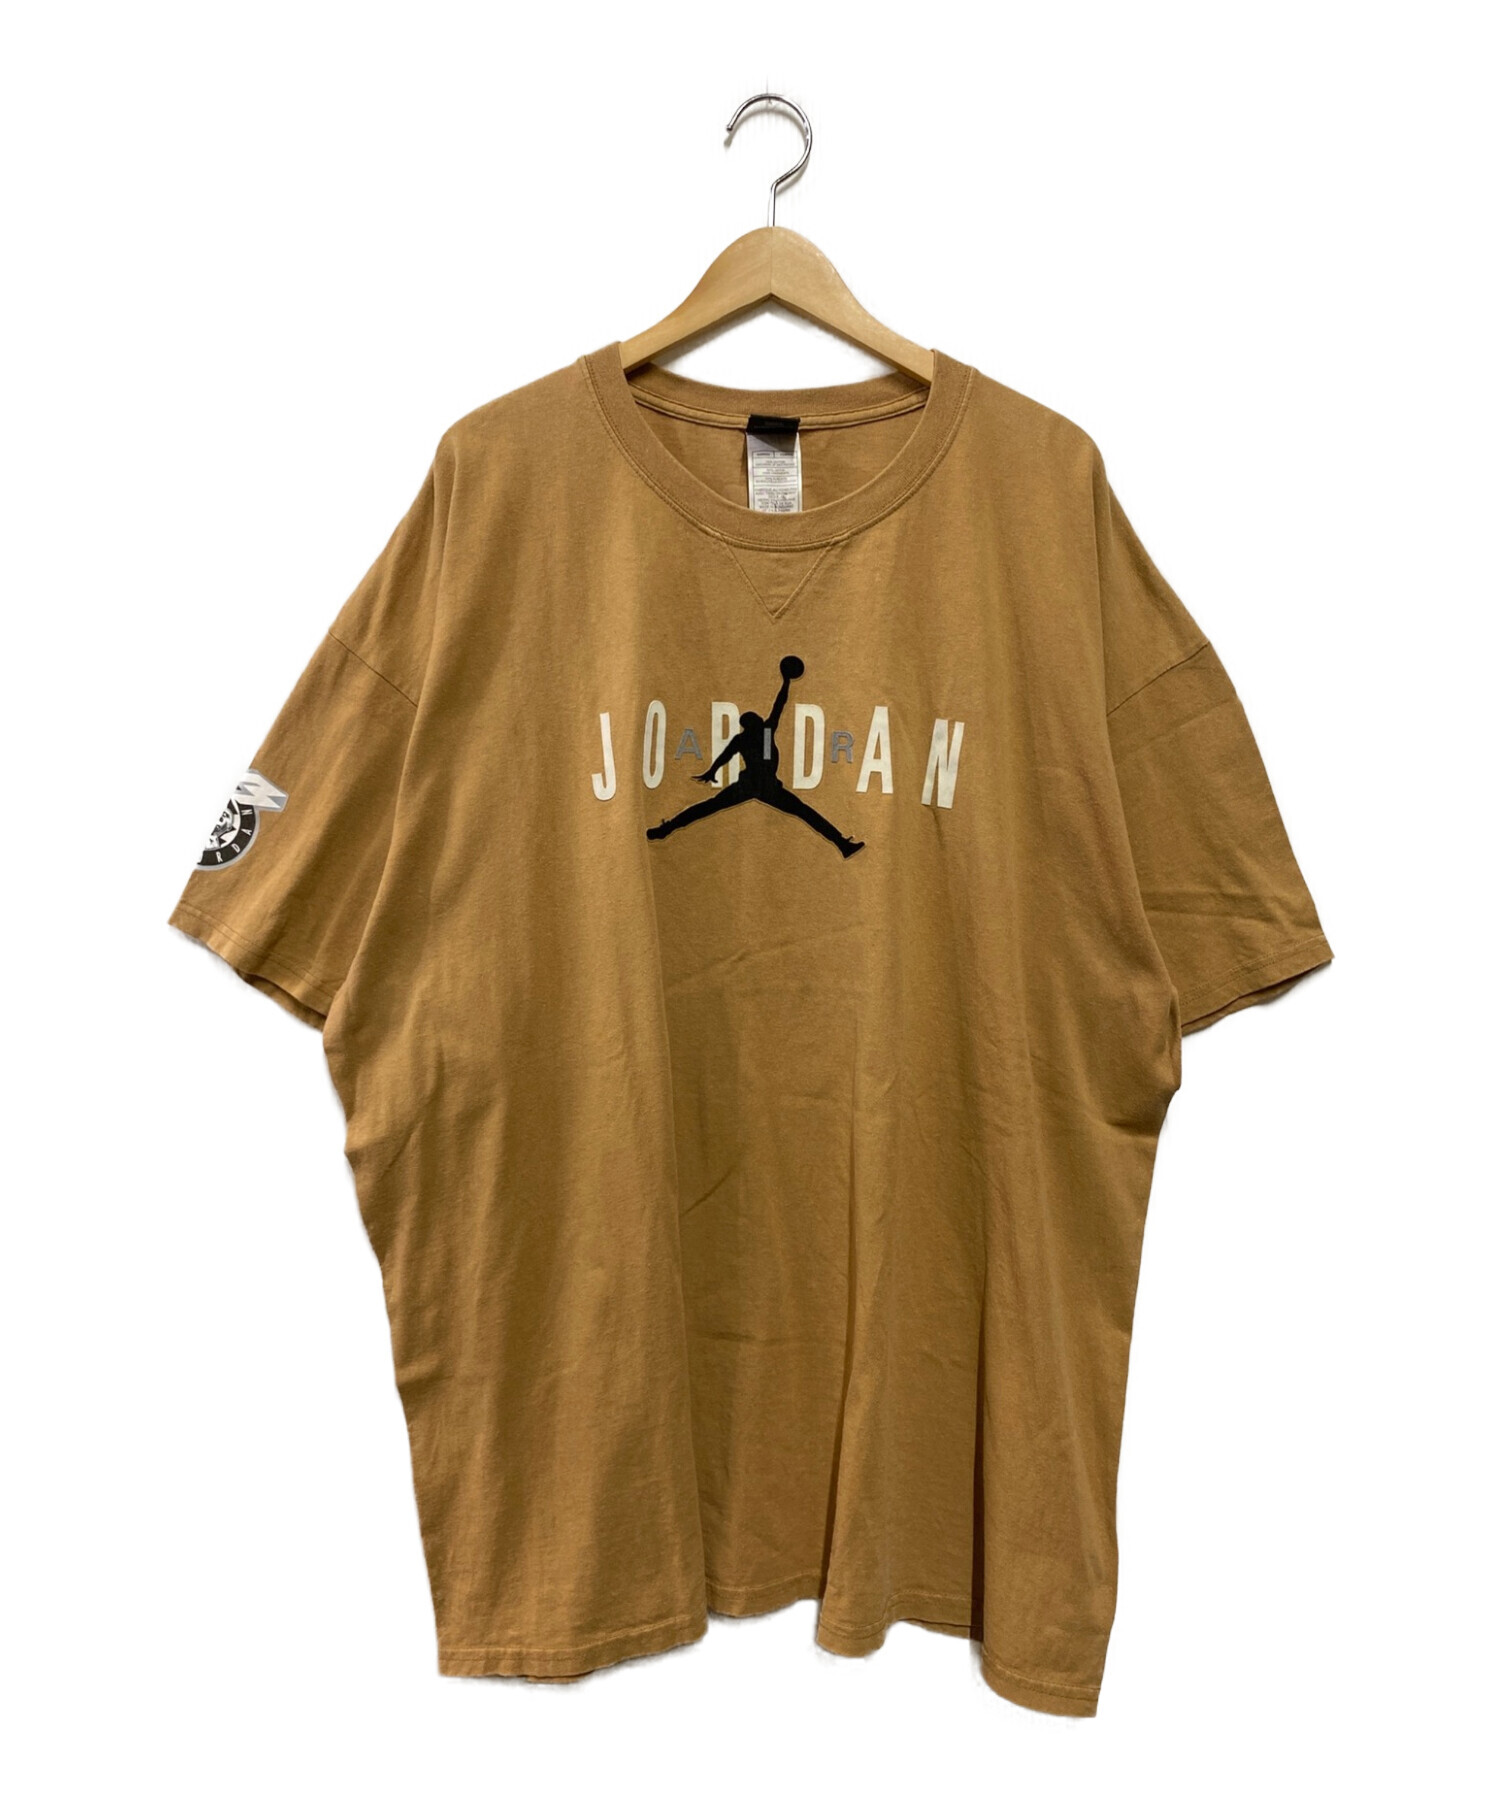 LA購入レア新品JORDAN ジョーダン ジャンプマン Tシャツ NIKE緑XL